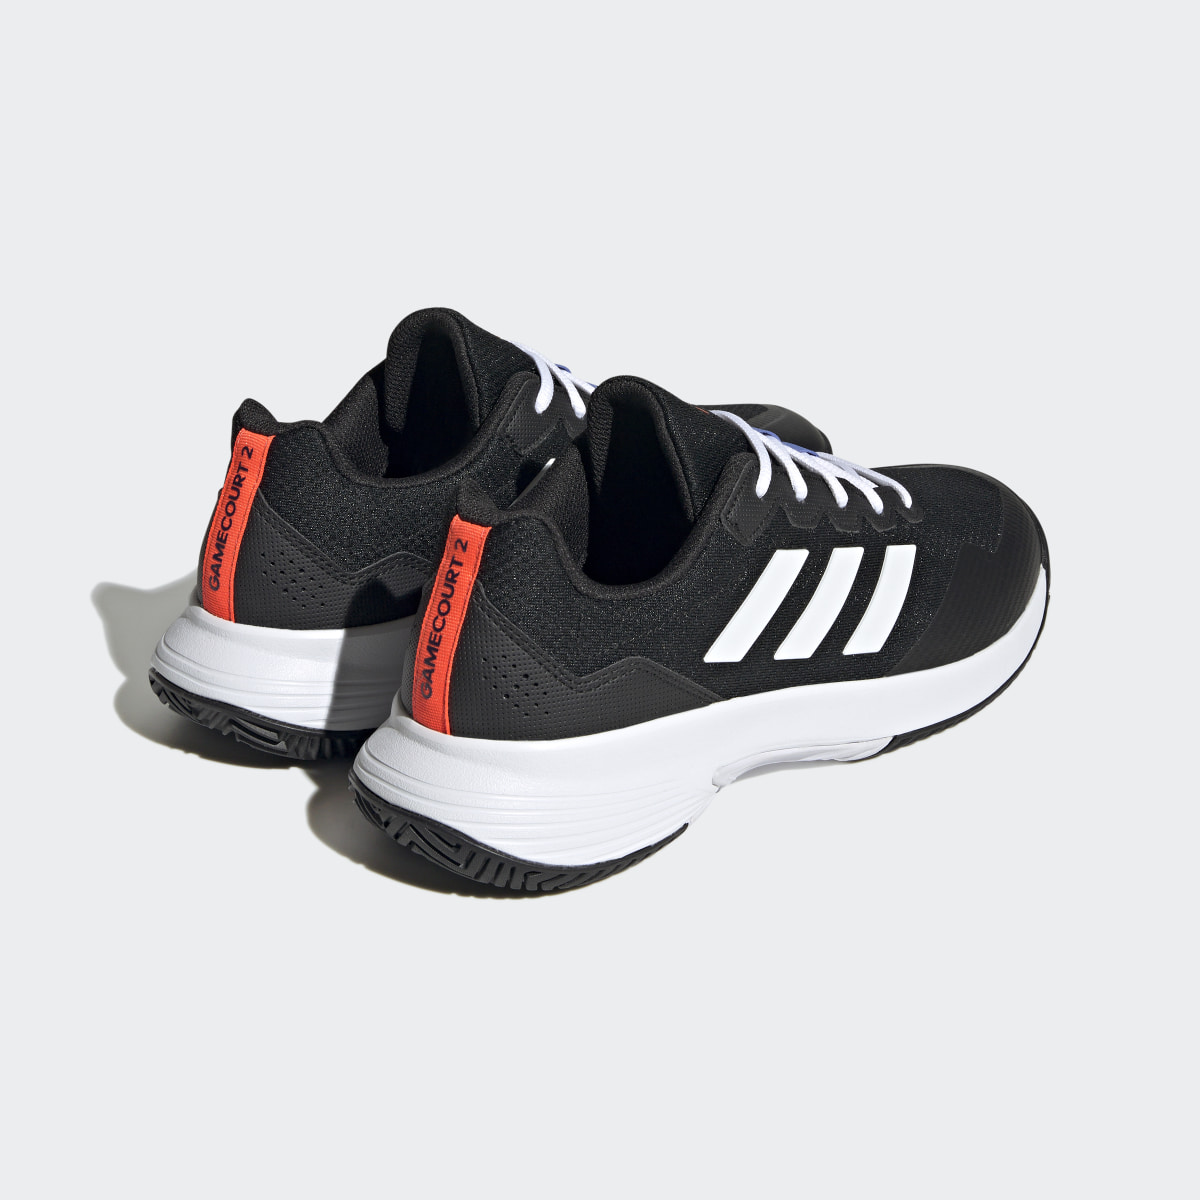 Adidas Gamecourt 2.0 Tennis Shoes. 6